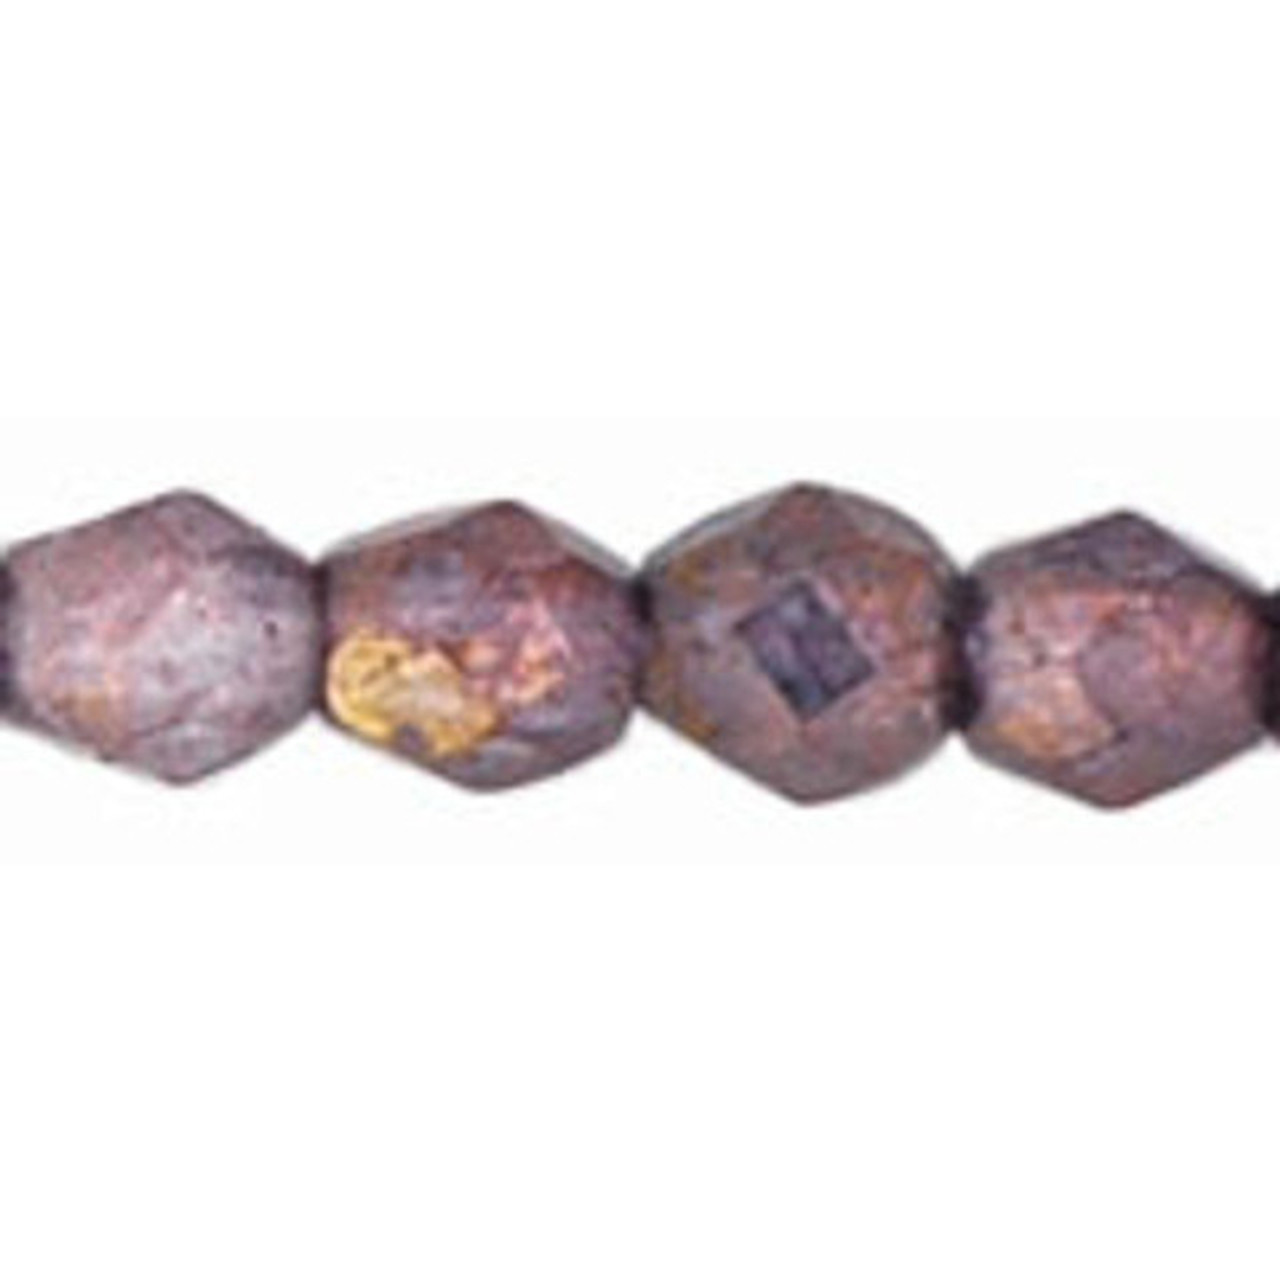 Firepolish 3mm : Luster - Opaque Amethyst - Capital City Beads